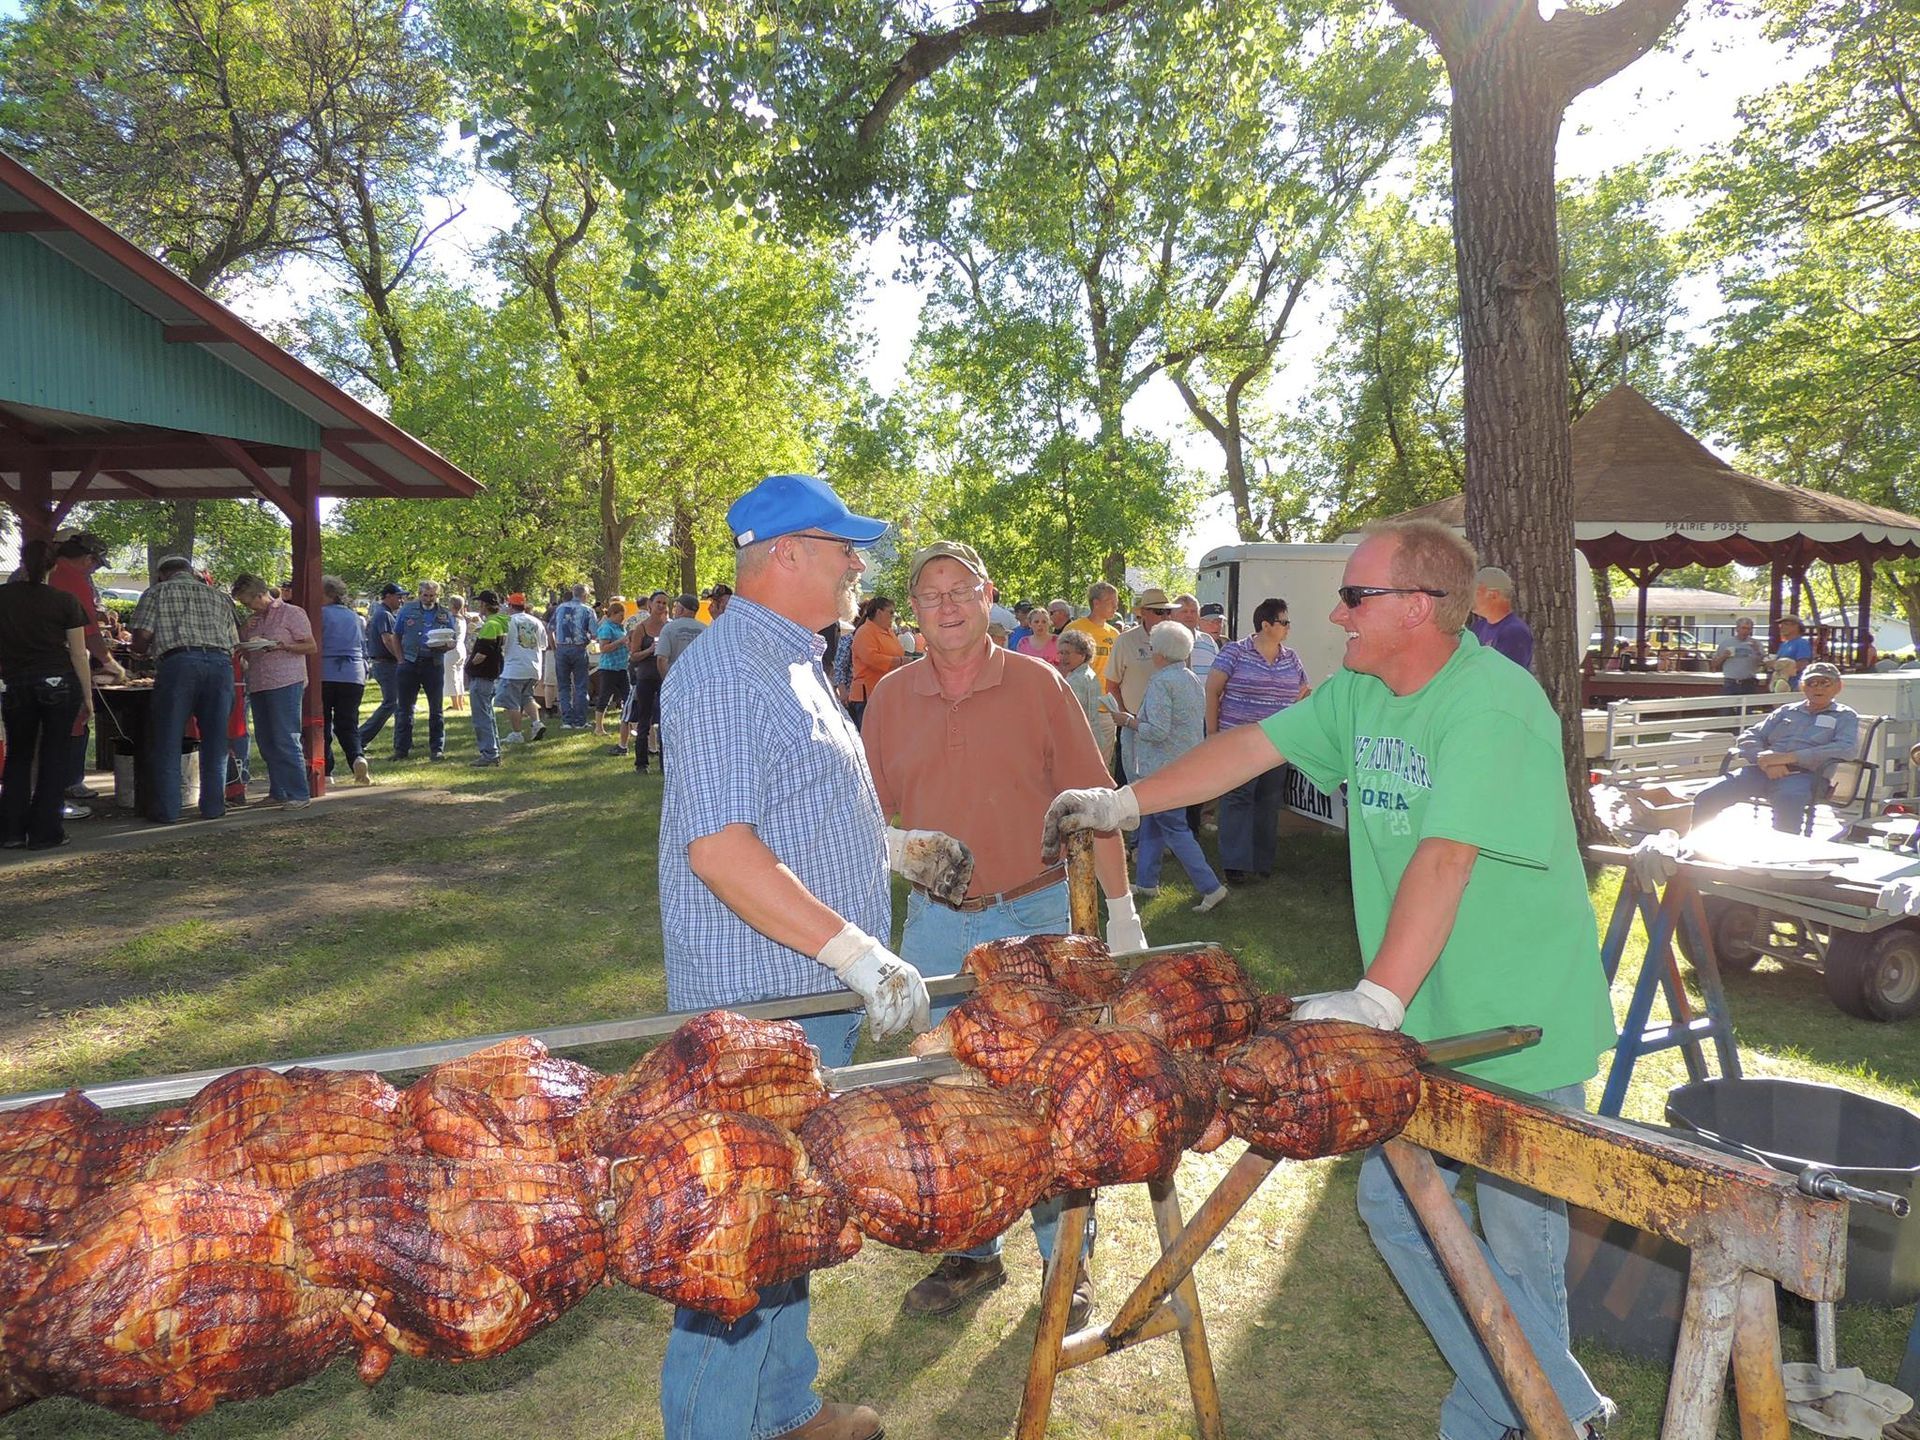 
World’s Largest Turkey Barbecue: world record In Aneta, North Dakota